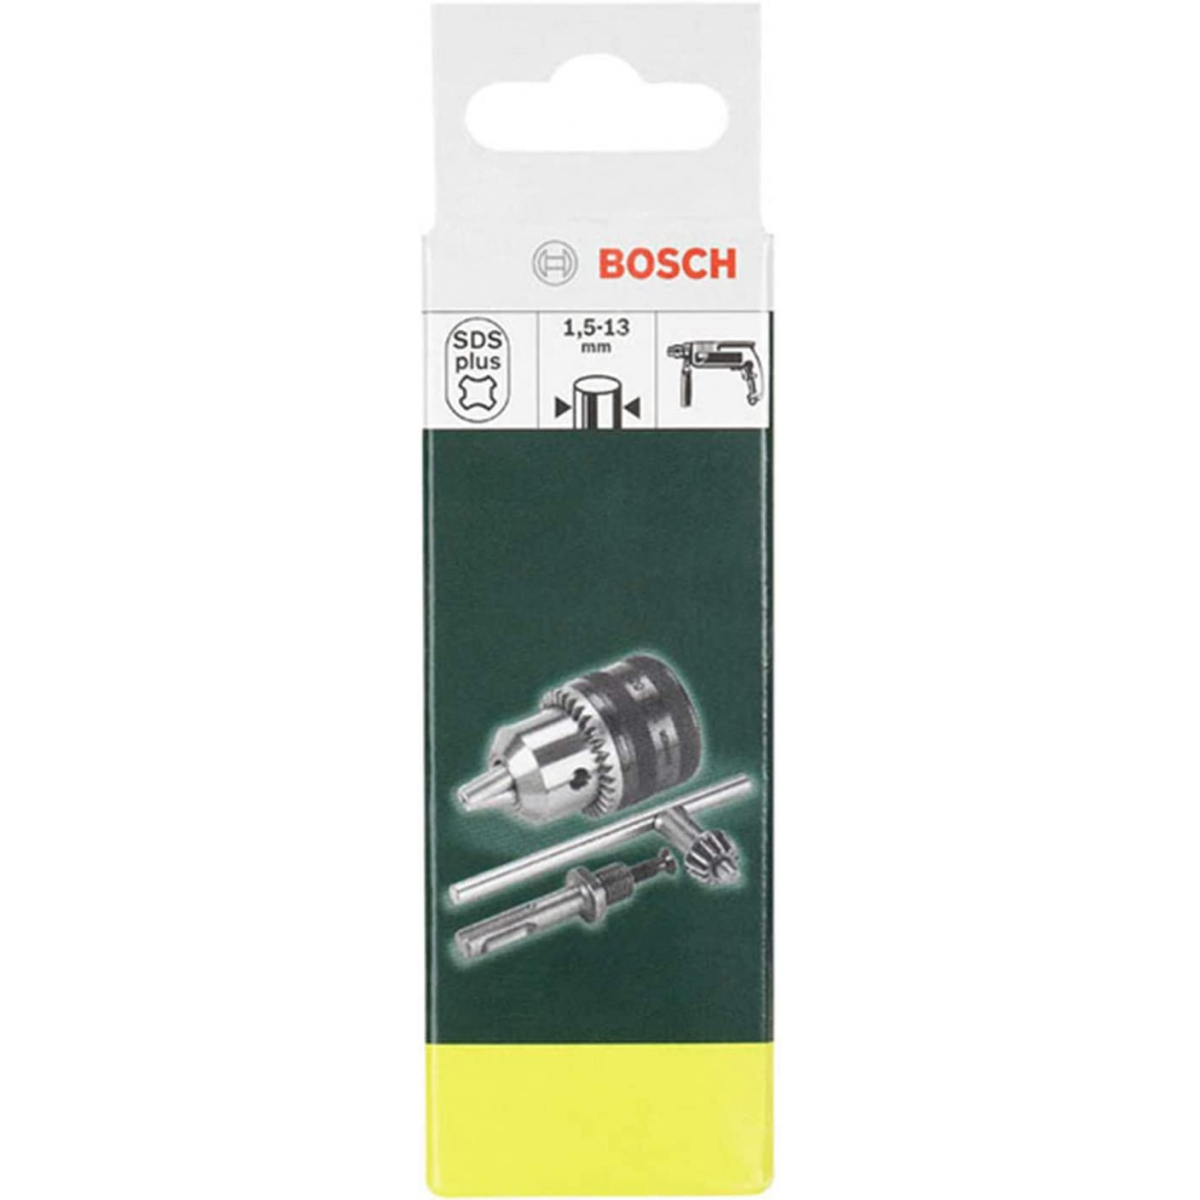 Bosch Mandrin à clé ø1.5-13mm 1/2-20 UNF et adaptateur SDS+ (2607000982)